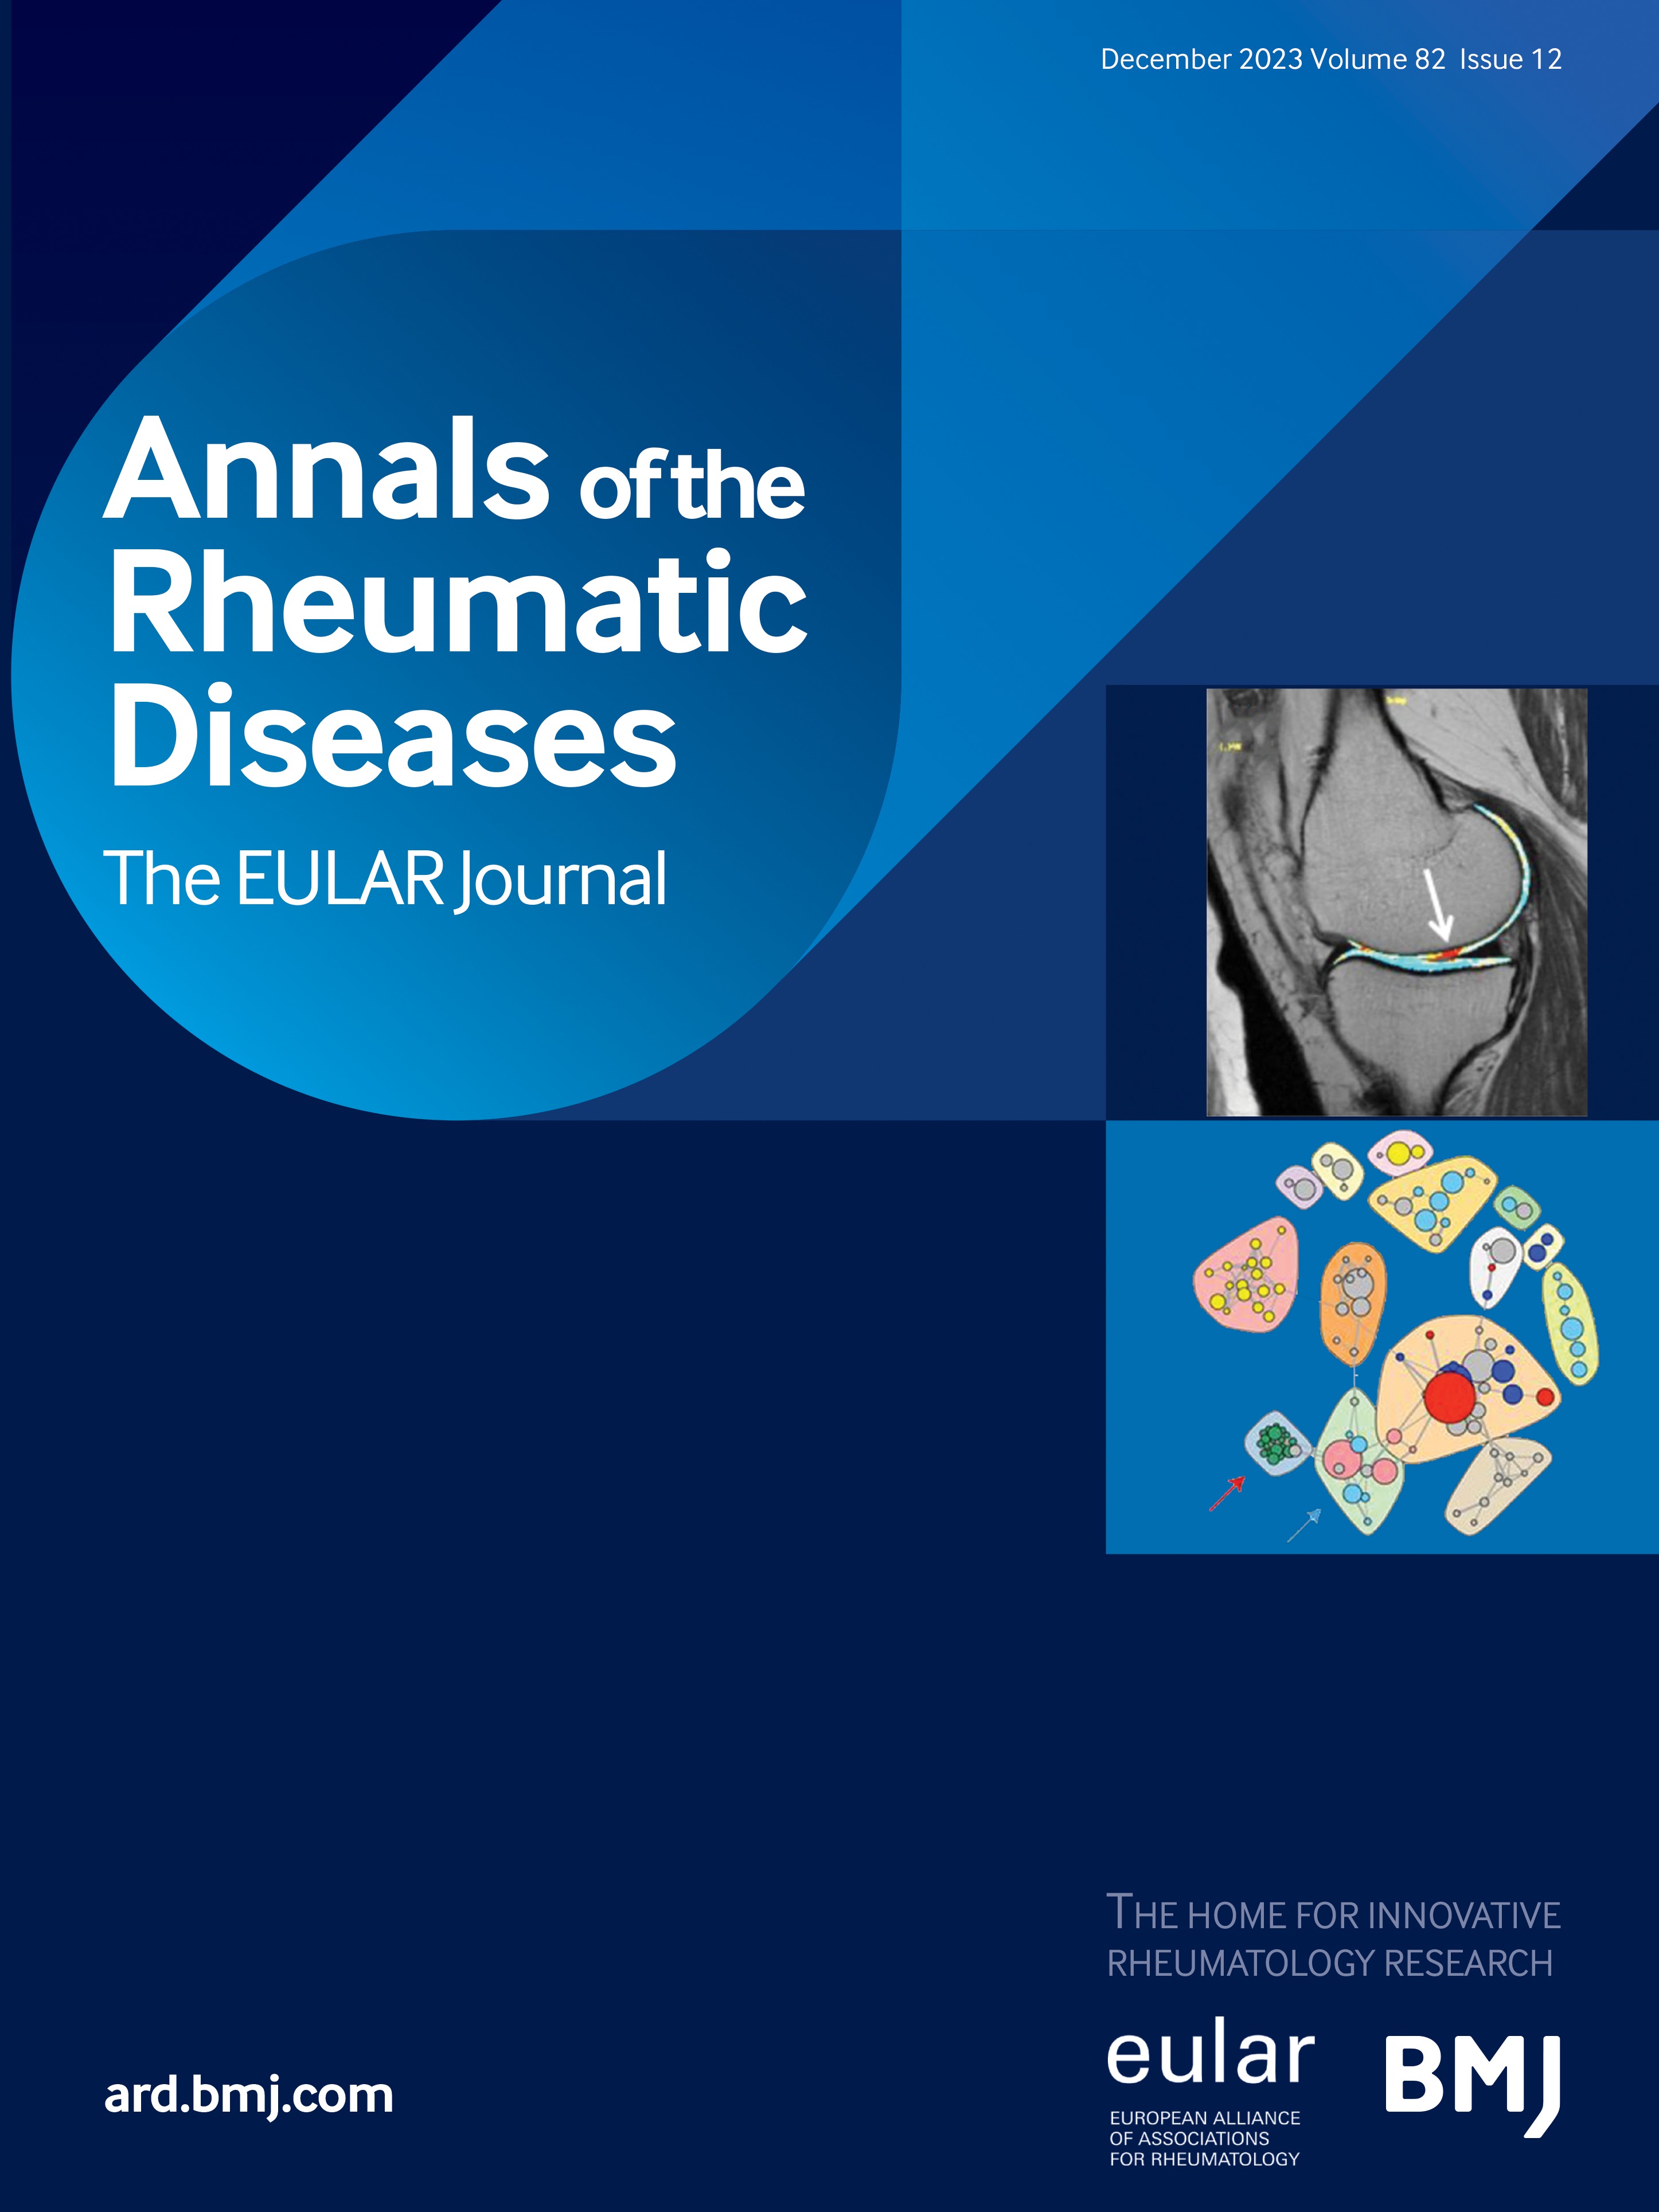 Disease activity drives transcriptomic heterogeneity in early untreated rheumatoid synovitis